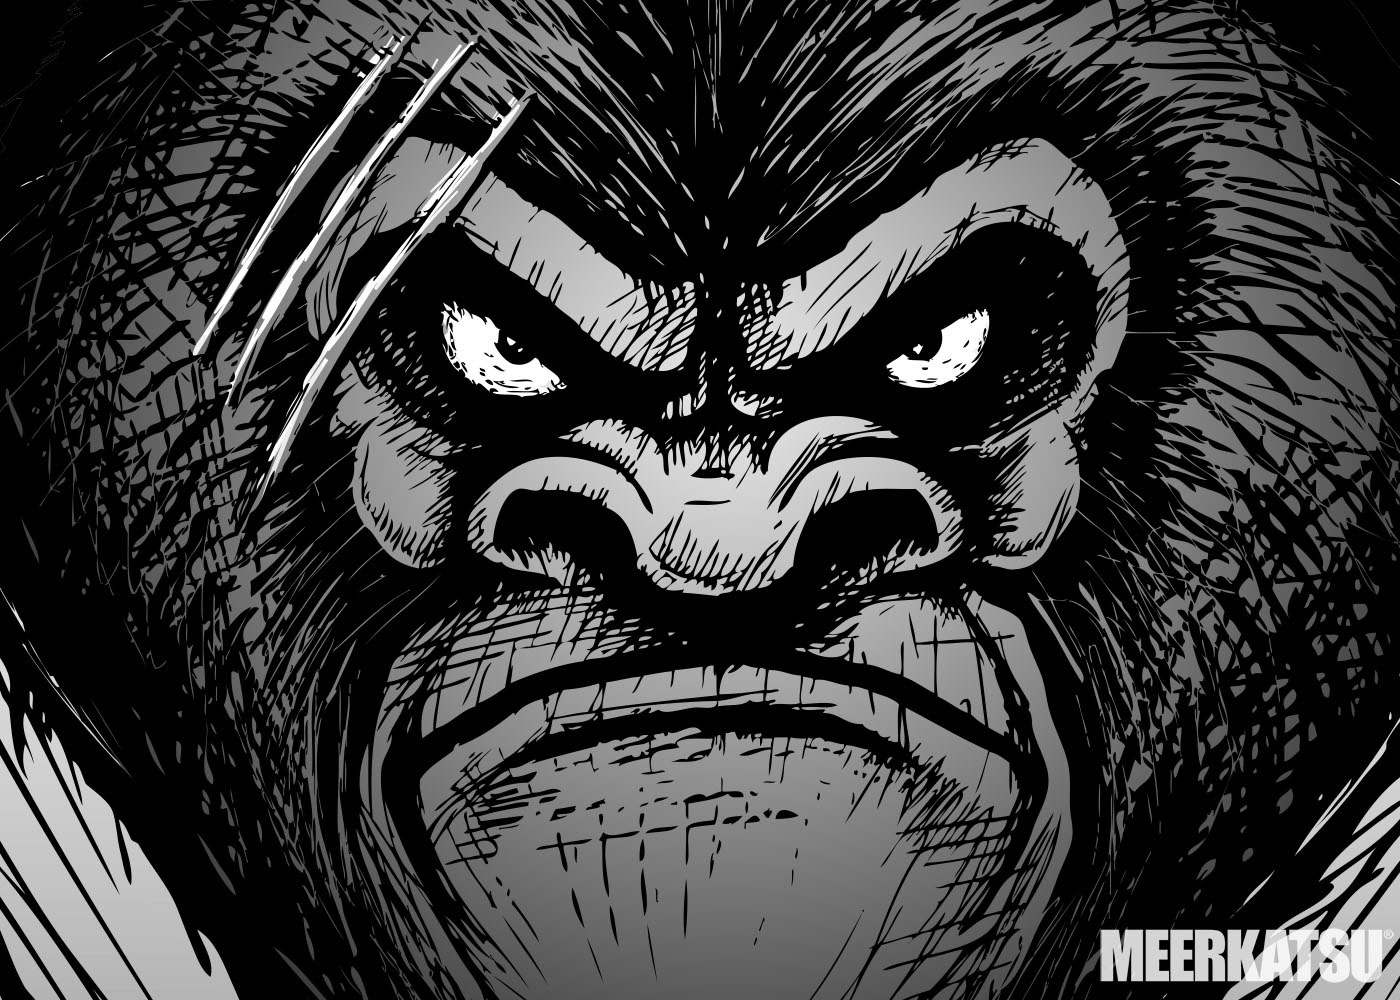 brazilian jiu-jitsu BJJ Grappling Martial Arts MMA Mixed martial arts gorilla ape